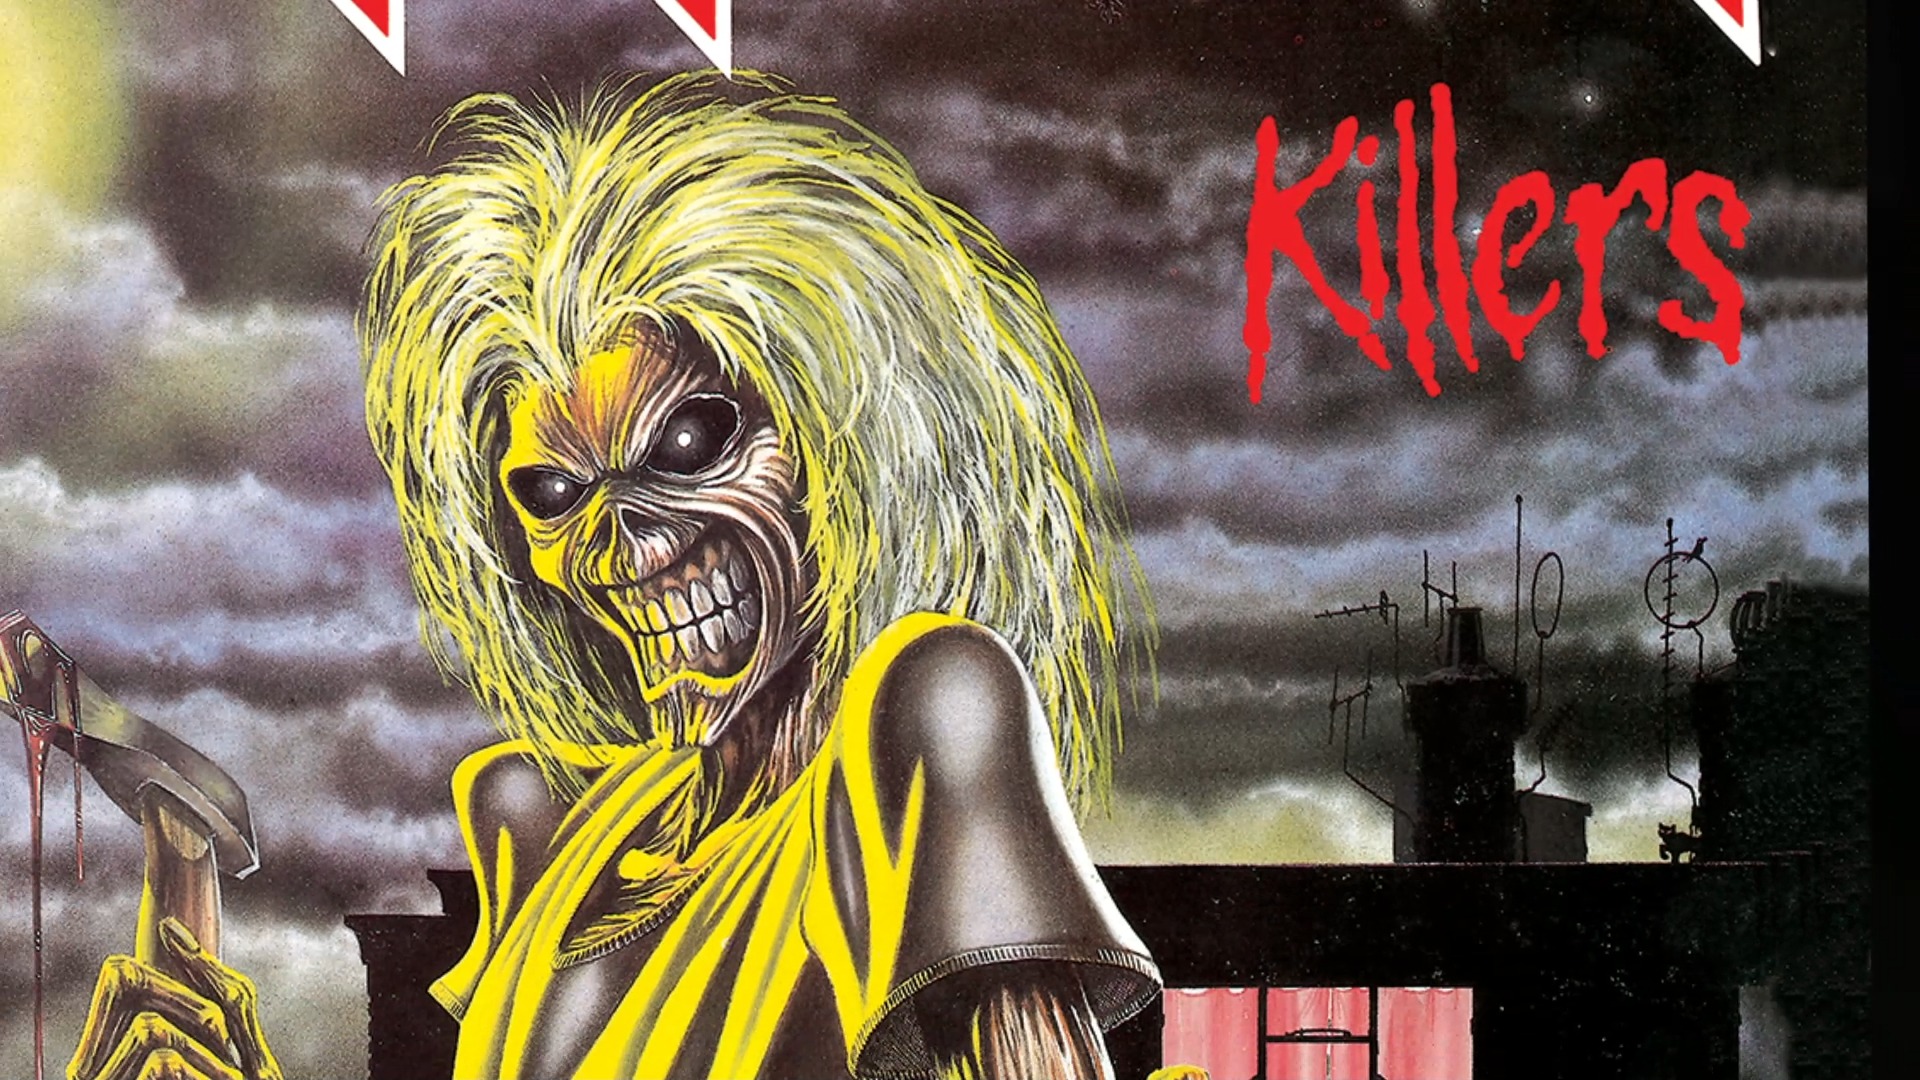 Killers обложка. Айрон мейден Киллерс. Iron Maiden "Killers". Iron Maiden Killers обложка.